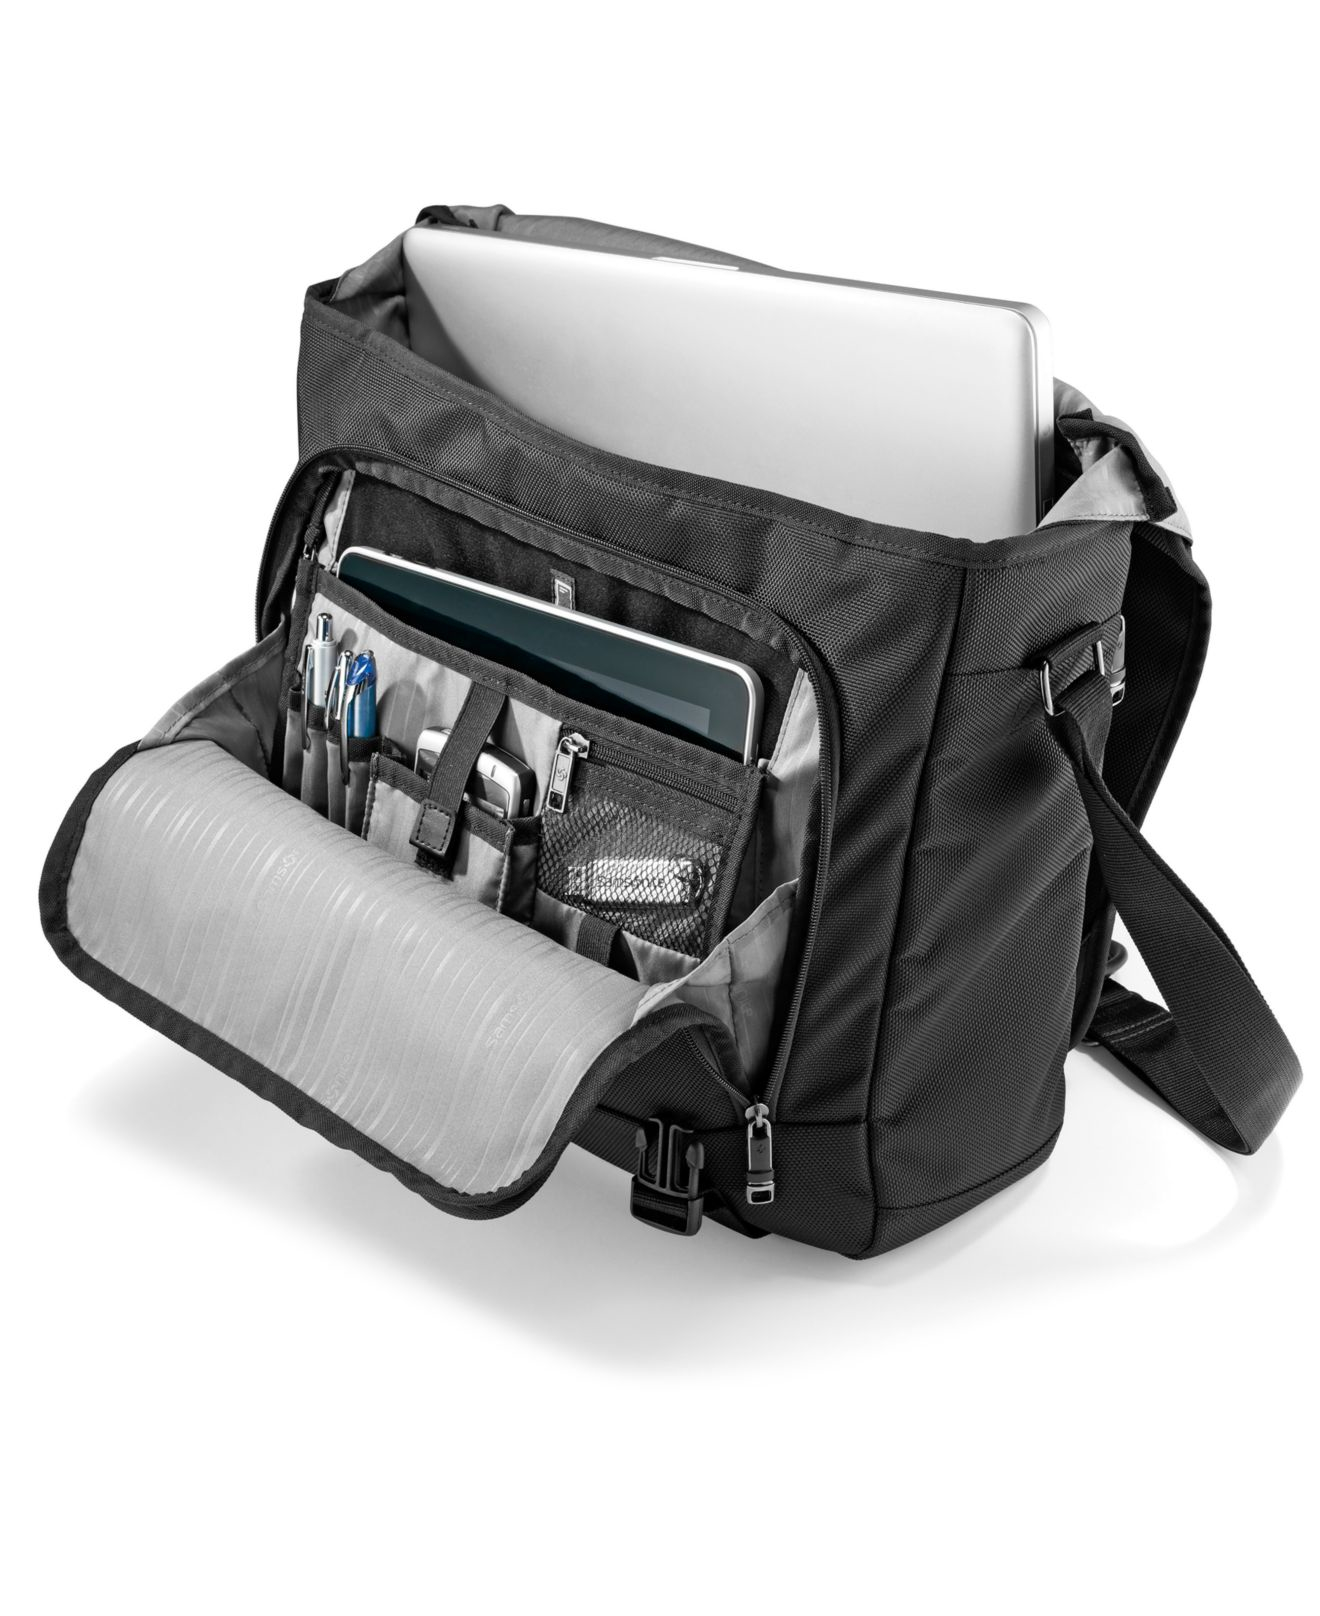 Lyst - Samsonite Professional Laptop Messenger Bag in Black for Men